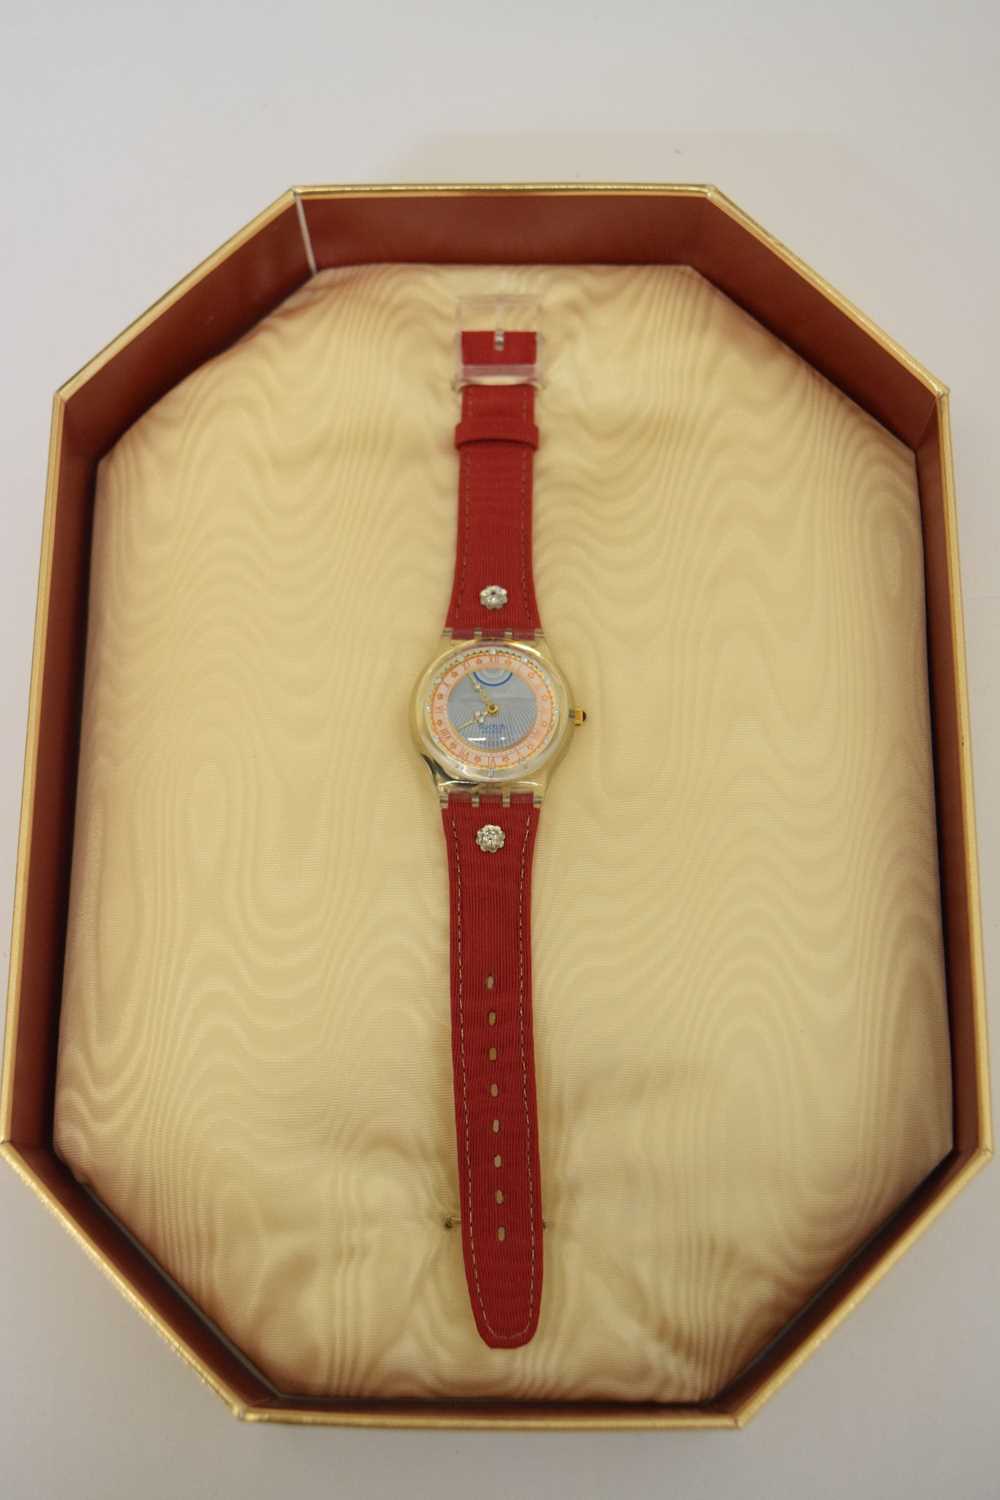 Swatch - Roi Soleil limited edition GZ 127 quartz wristwatch - Image 2 of 9